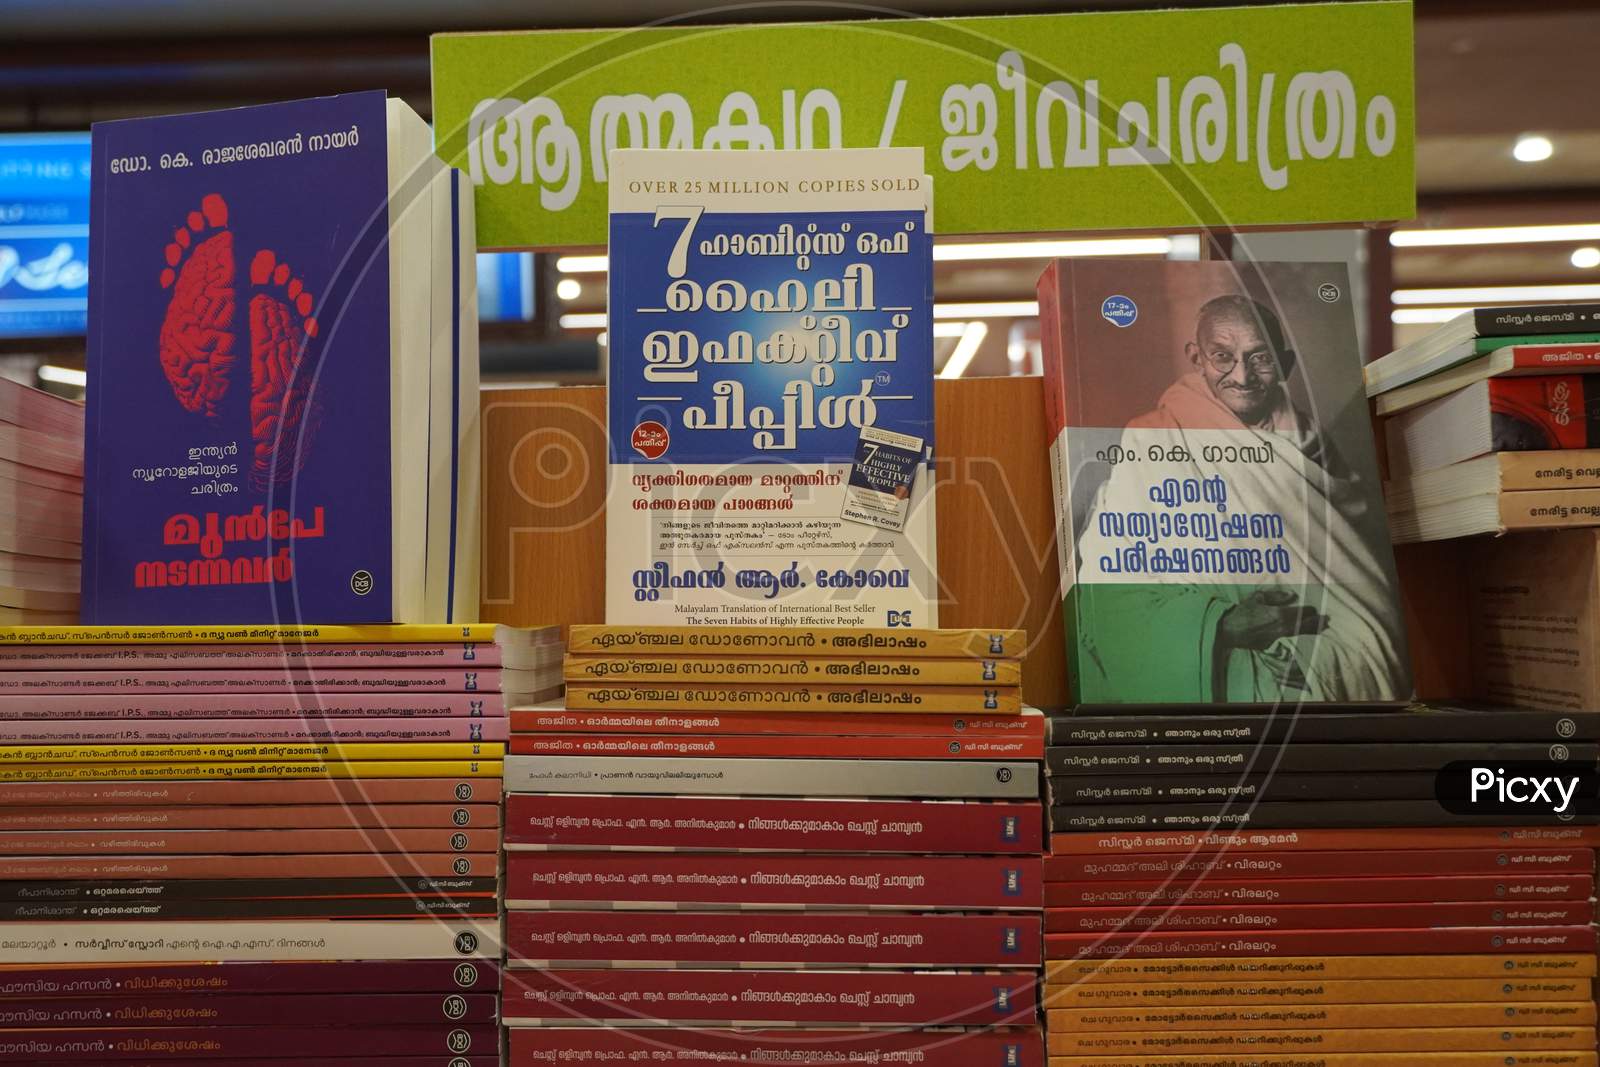 A Set Of Malayalam Novels Displayed In A Book Store. A Shelf Full Of Old And New Malayalam Books - Kochi, Kerala: 18 February 2020